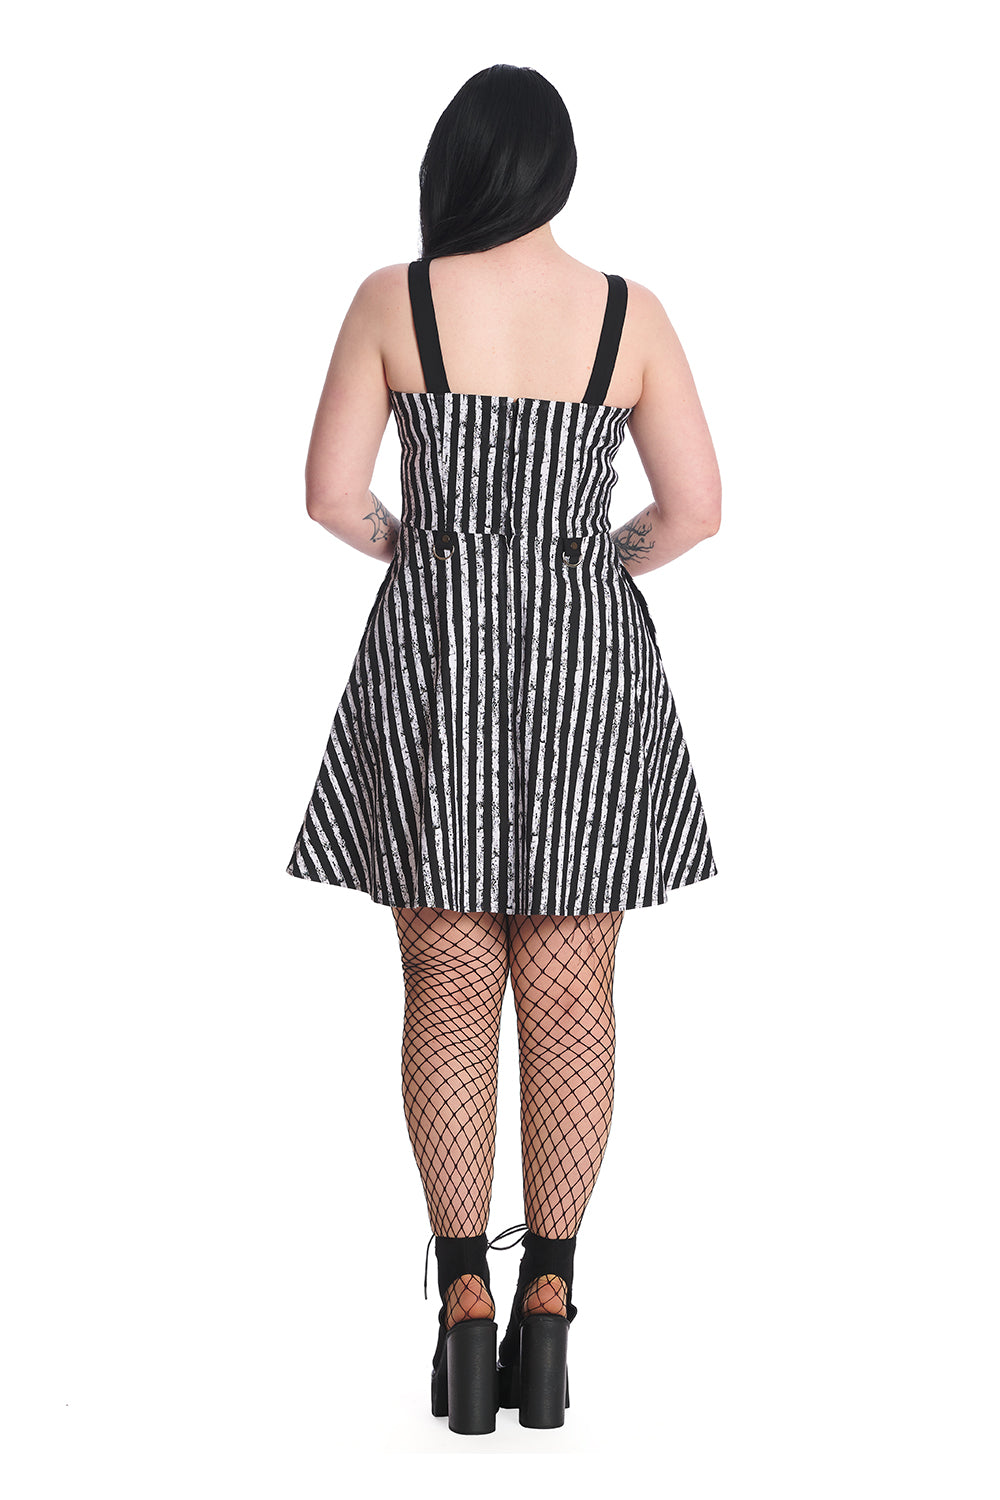 Banned Alternative Nightvixen Striped Skater Dress